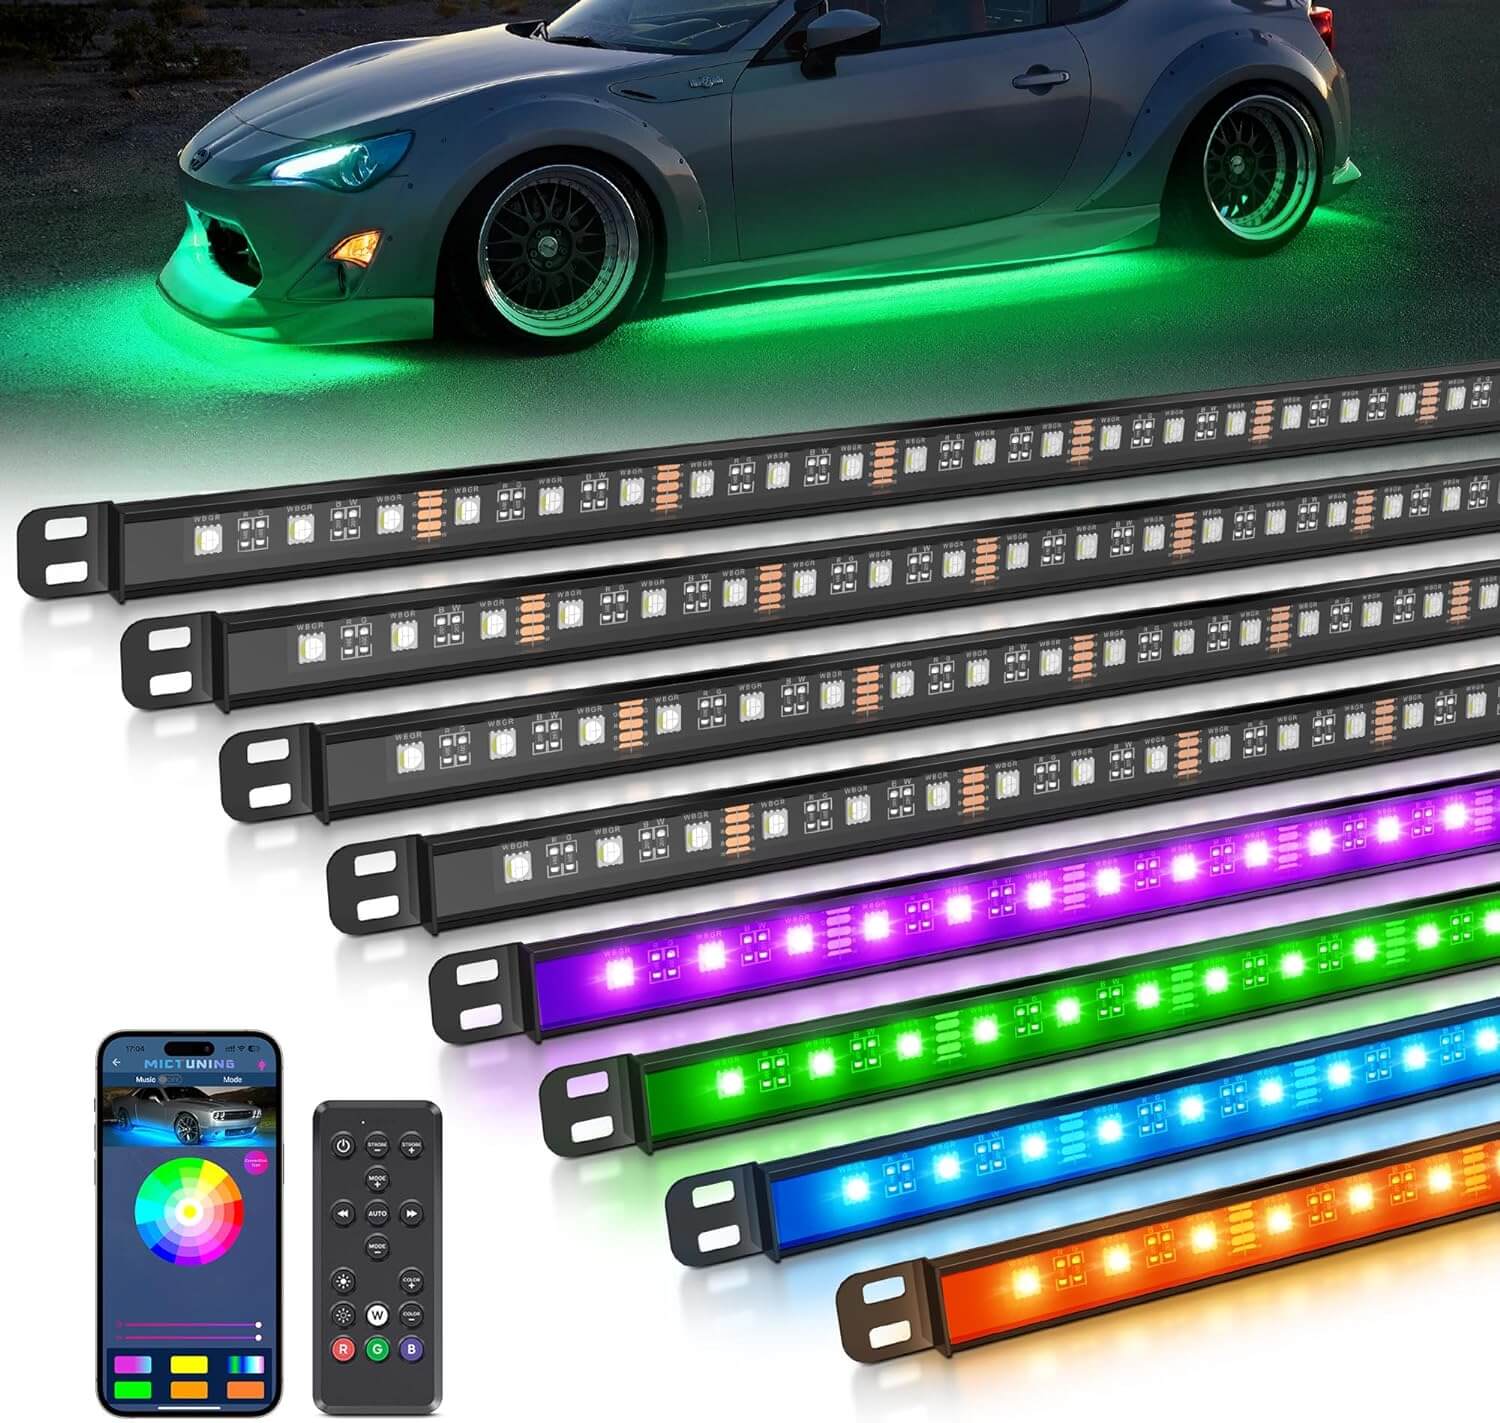 MICTUNING N8 RGBW LED Car Underglow Light Kit Bundle with C2 RGBW LED Rock Lights, N8 Car Underglow Light+C2 Rock Lights 8 Pods